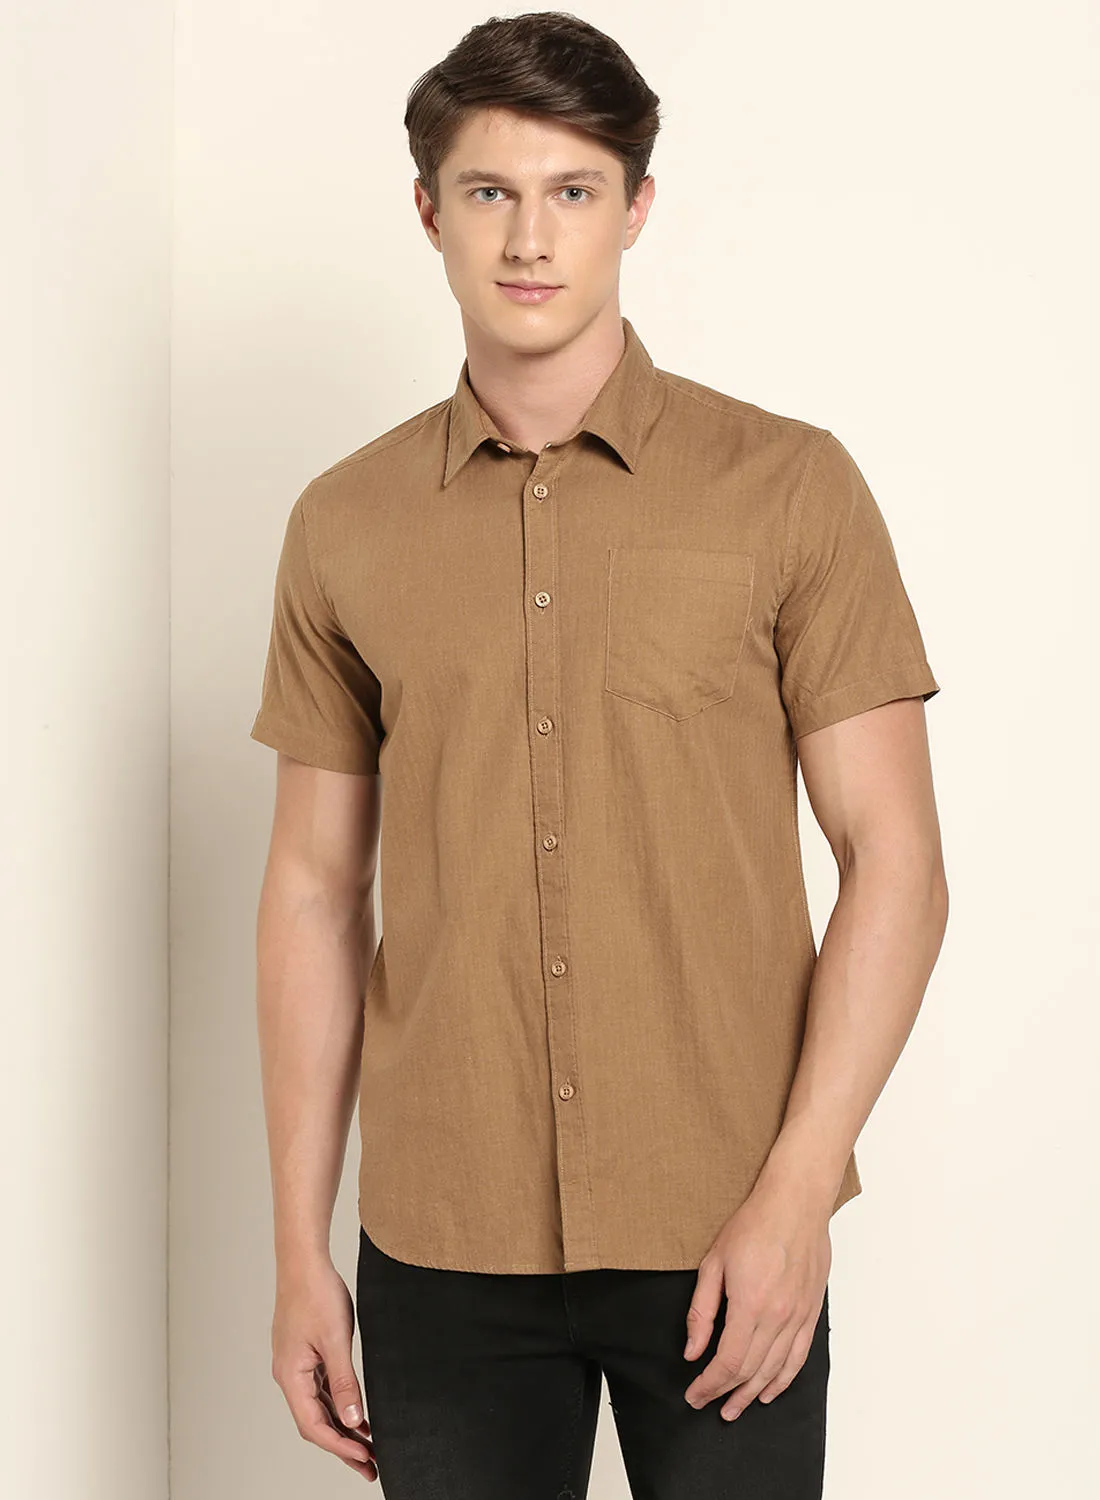 ABOF قميص كاجوال بياقة ياقة عادية وأكمام قصيرة لون بني تورتيلا